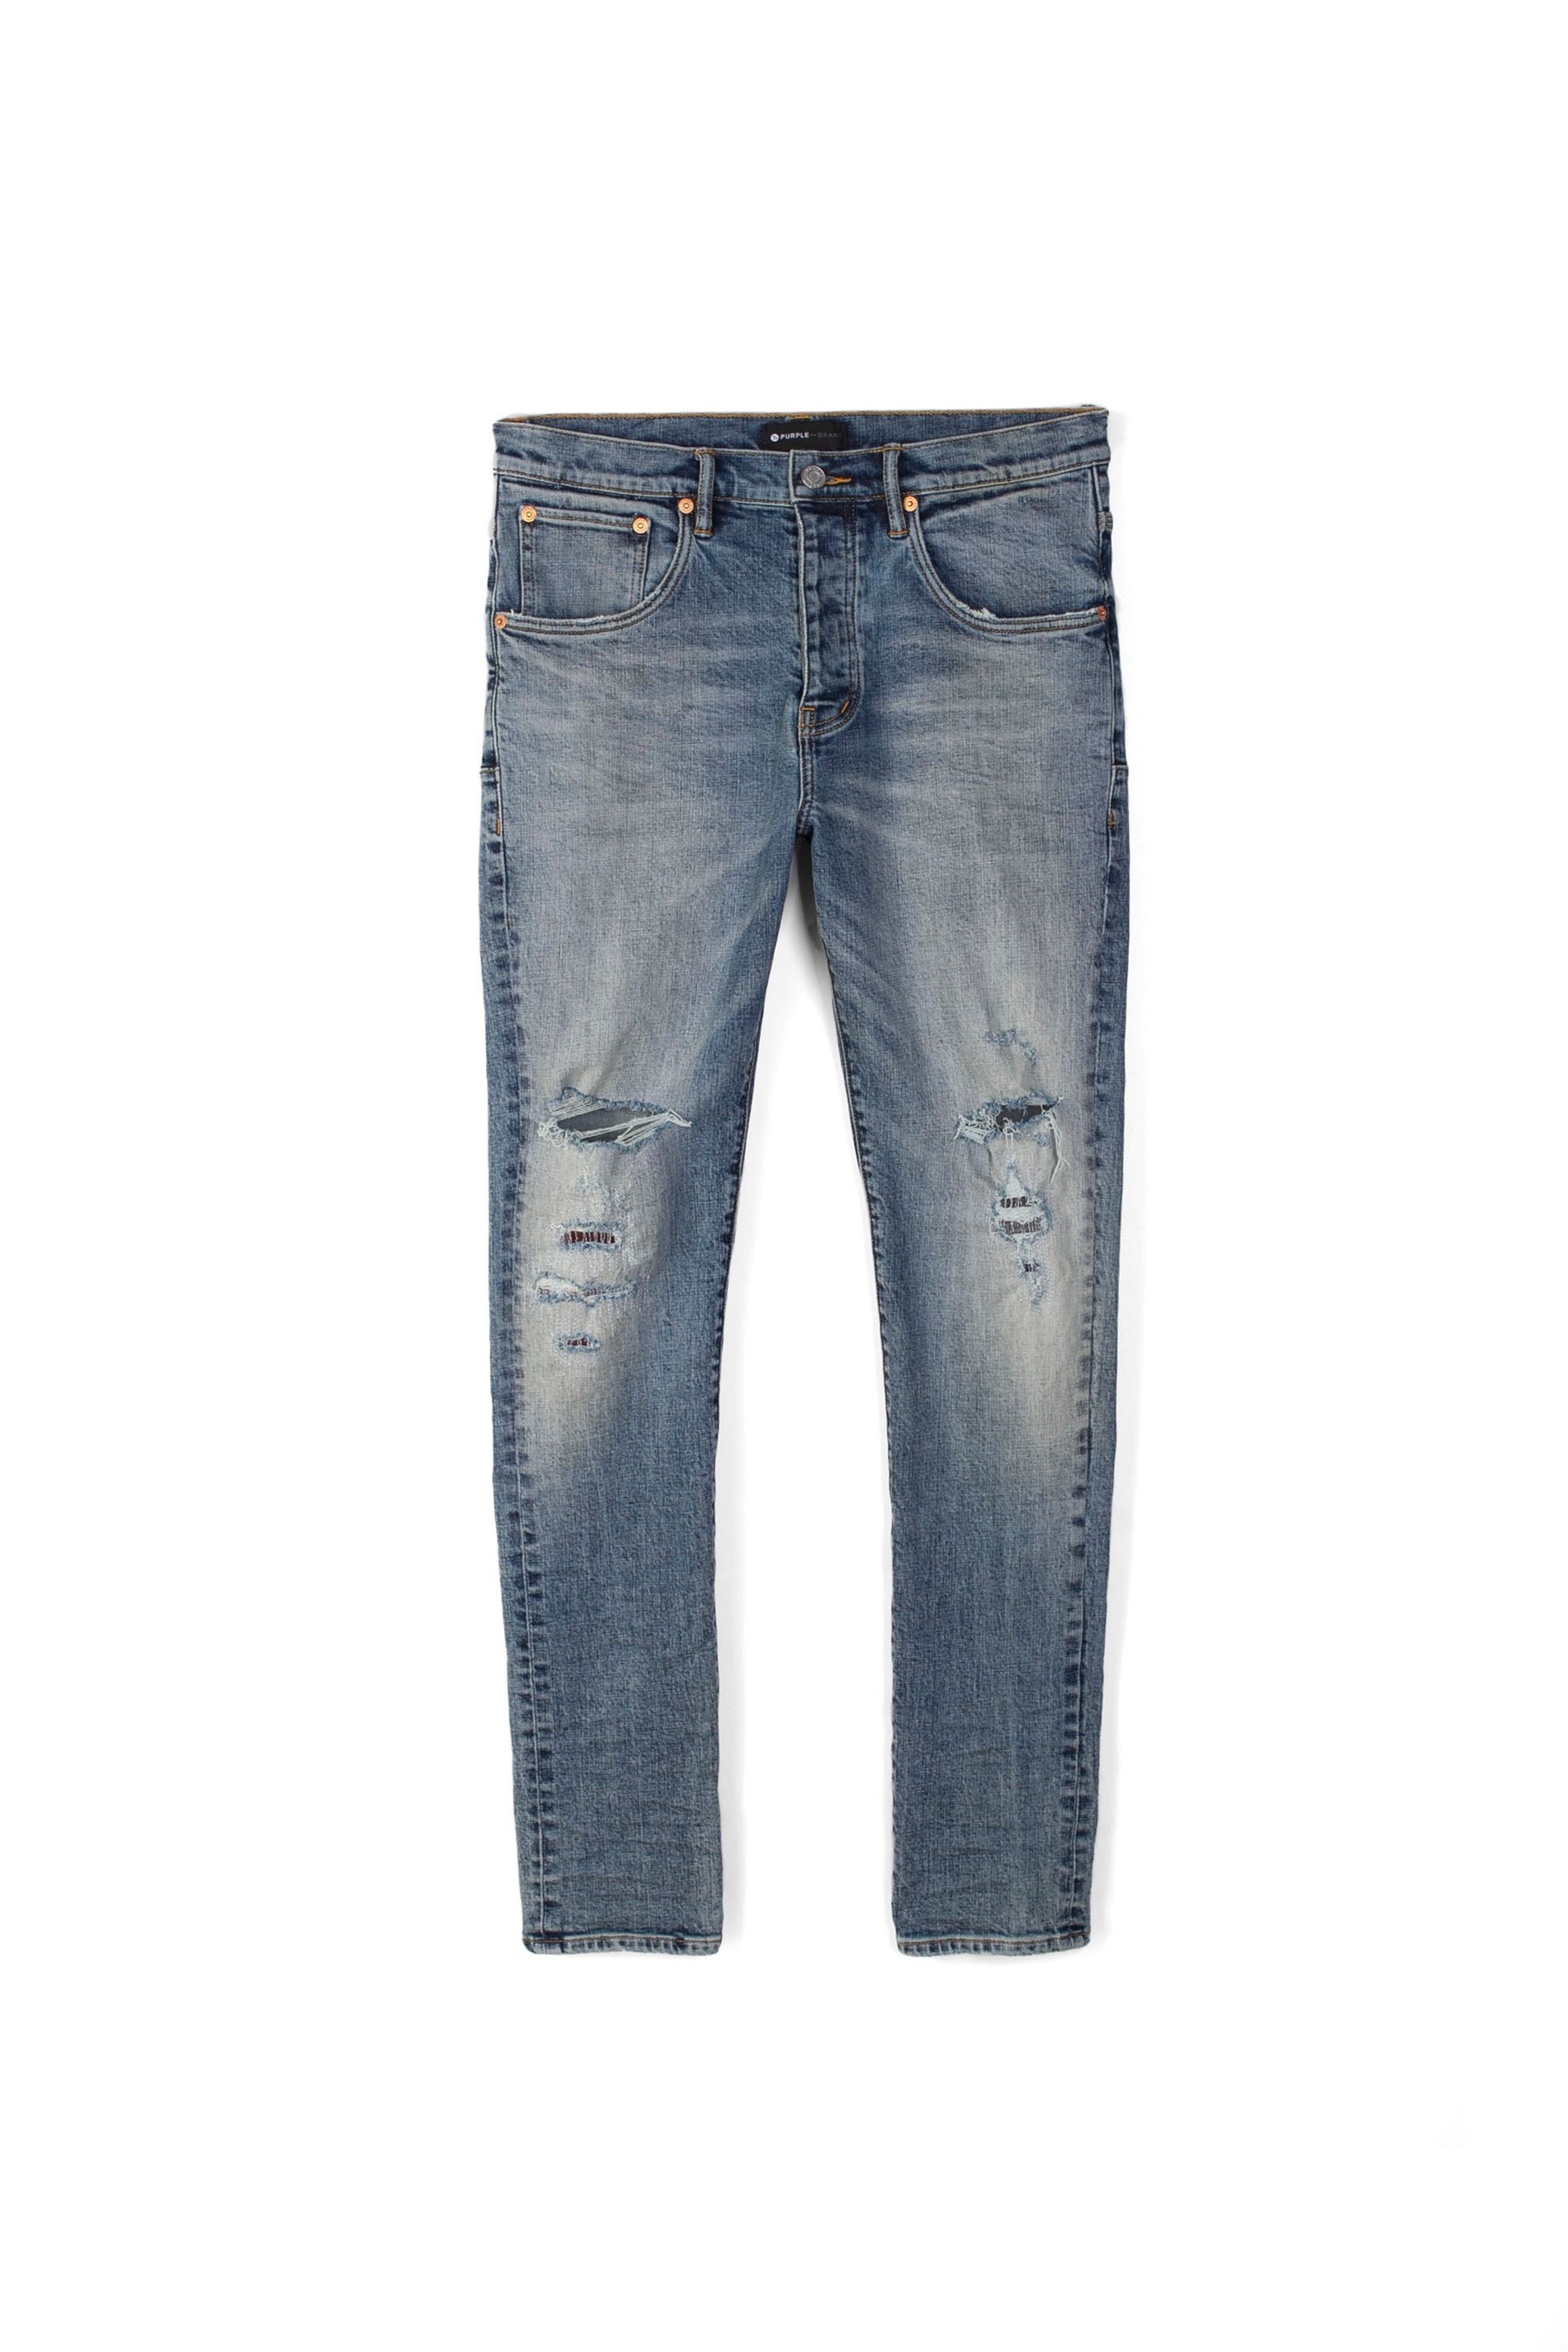 PURPLE BRAND - Men's Denim Jean - Mid Rise Slim - Style No. P002 - Indigo Flannel Repair - Front